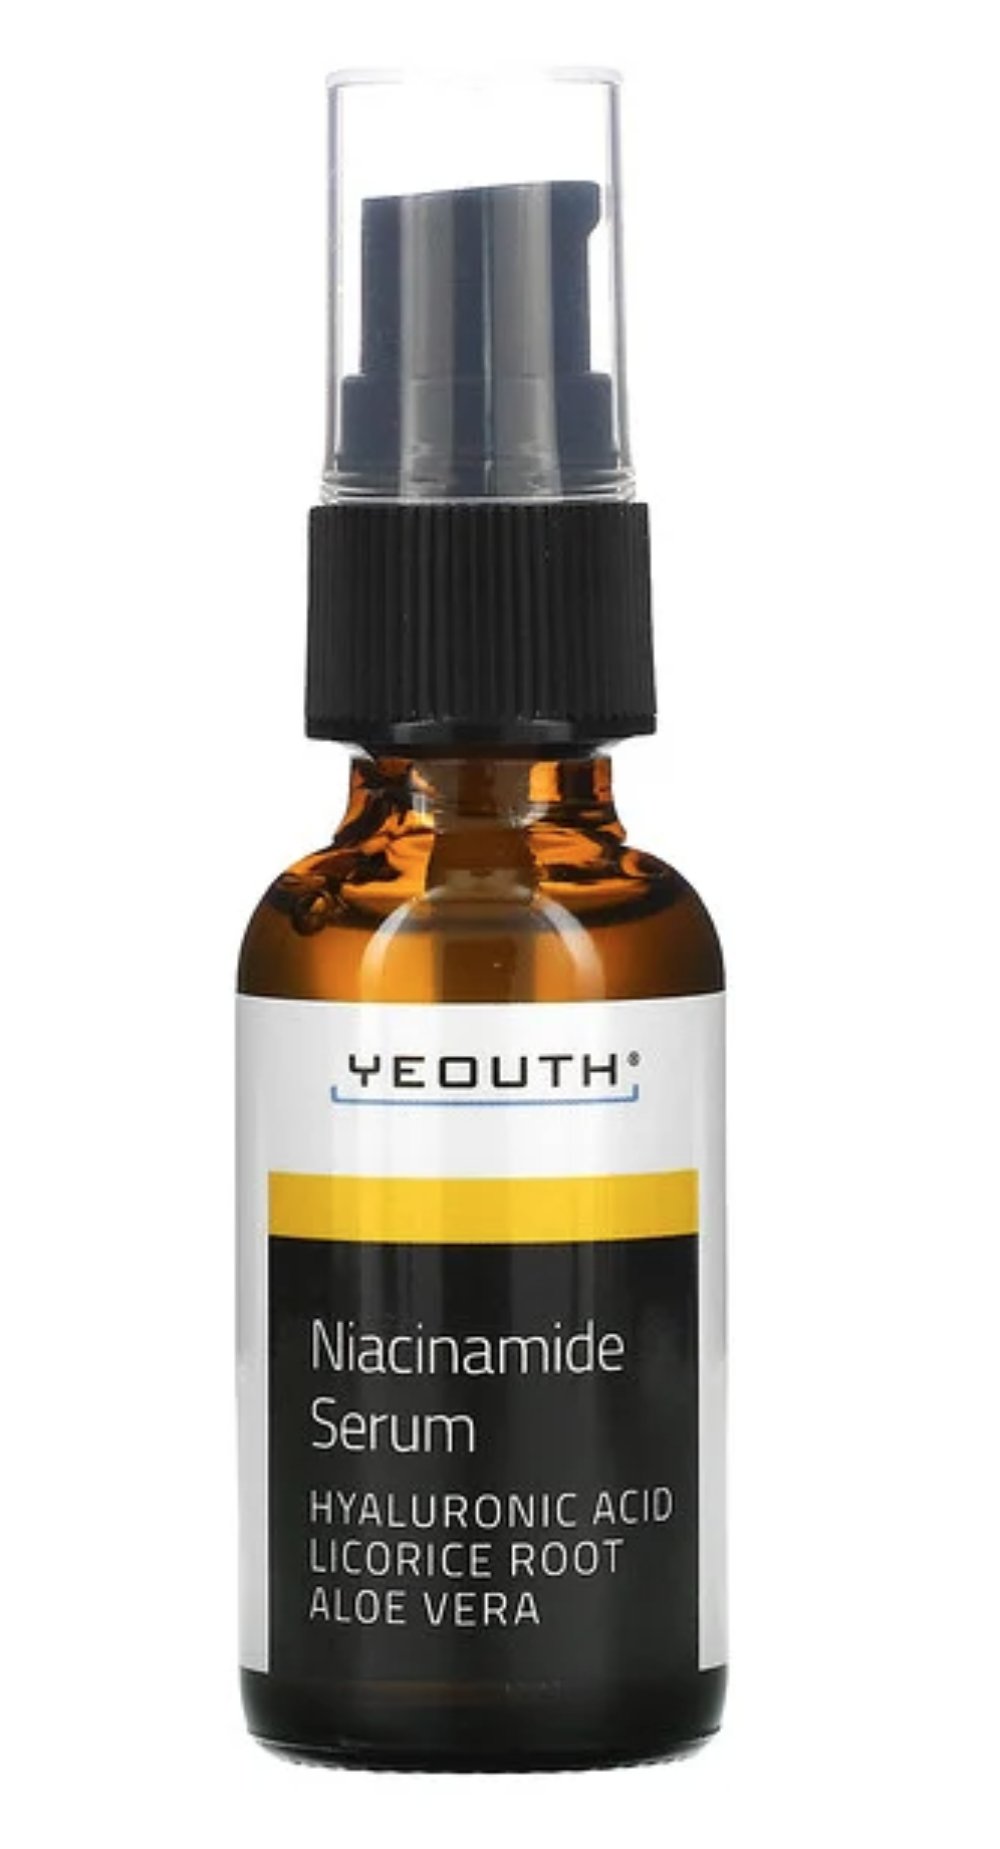 YEOUTH Niacinamide Serum 30 ml (1 fl oz) - The Face Method